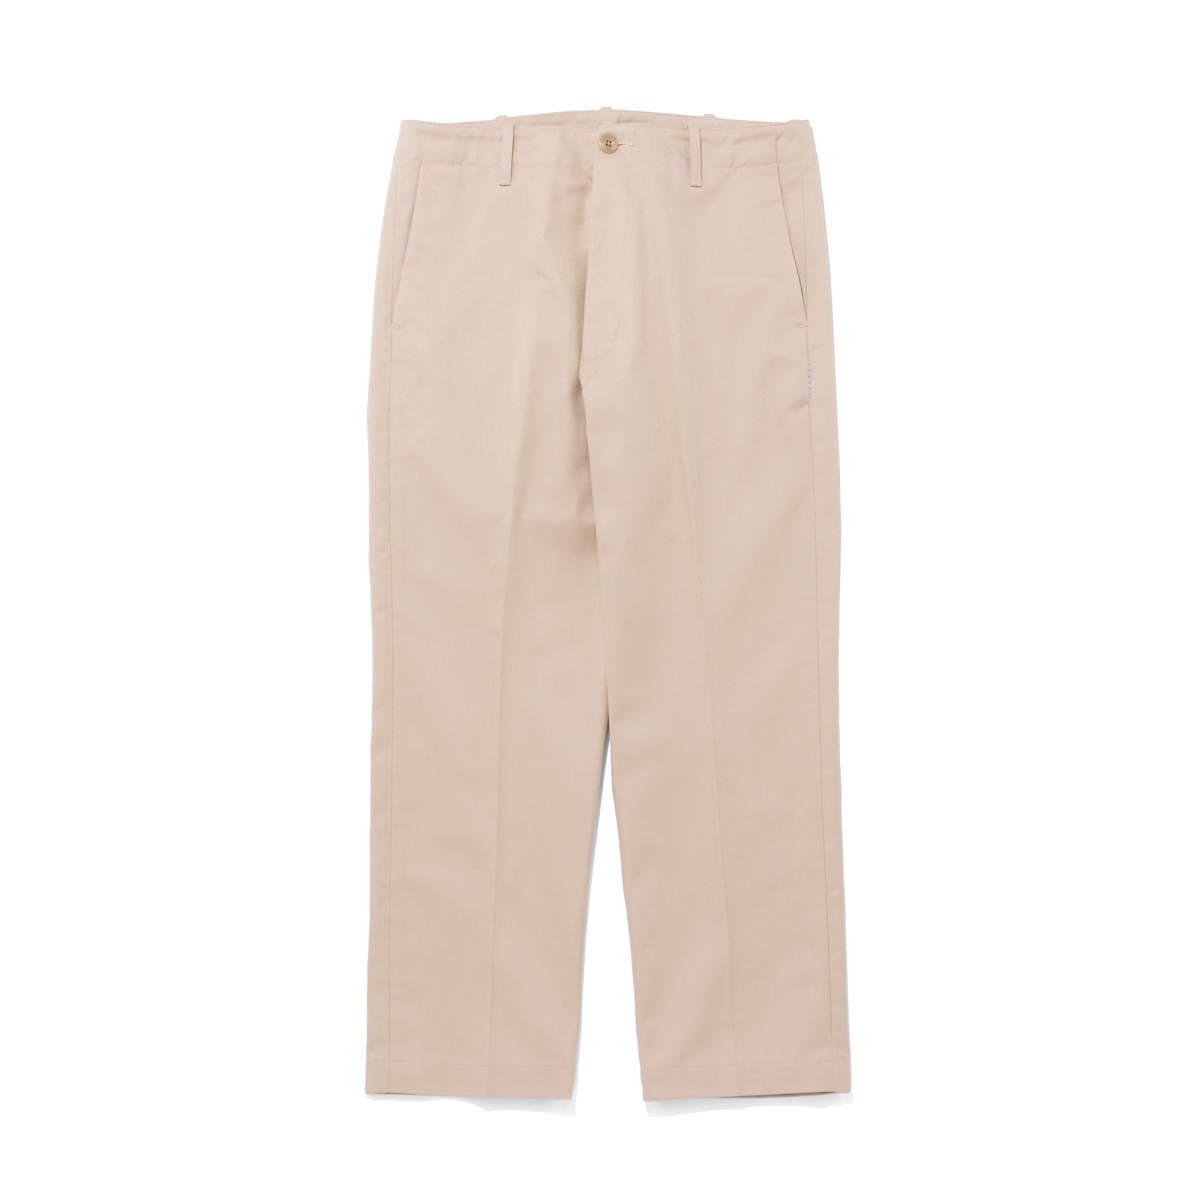 GLAY SEQUEL SQ-206-PANTS-16 CHINO pants - パンツ